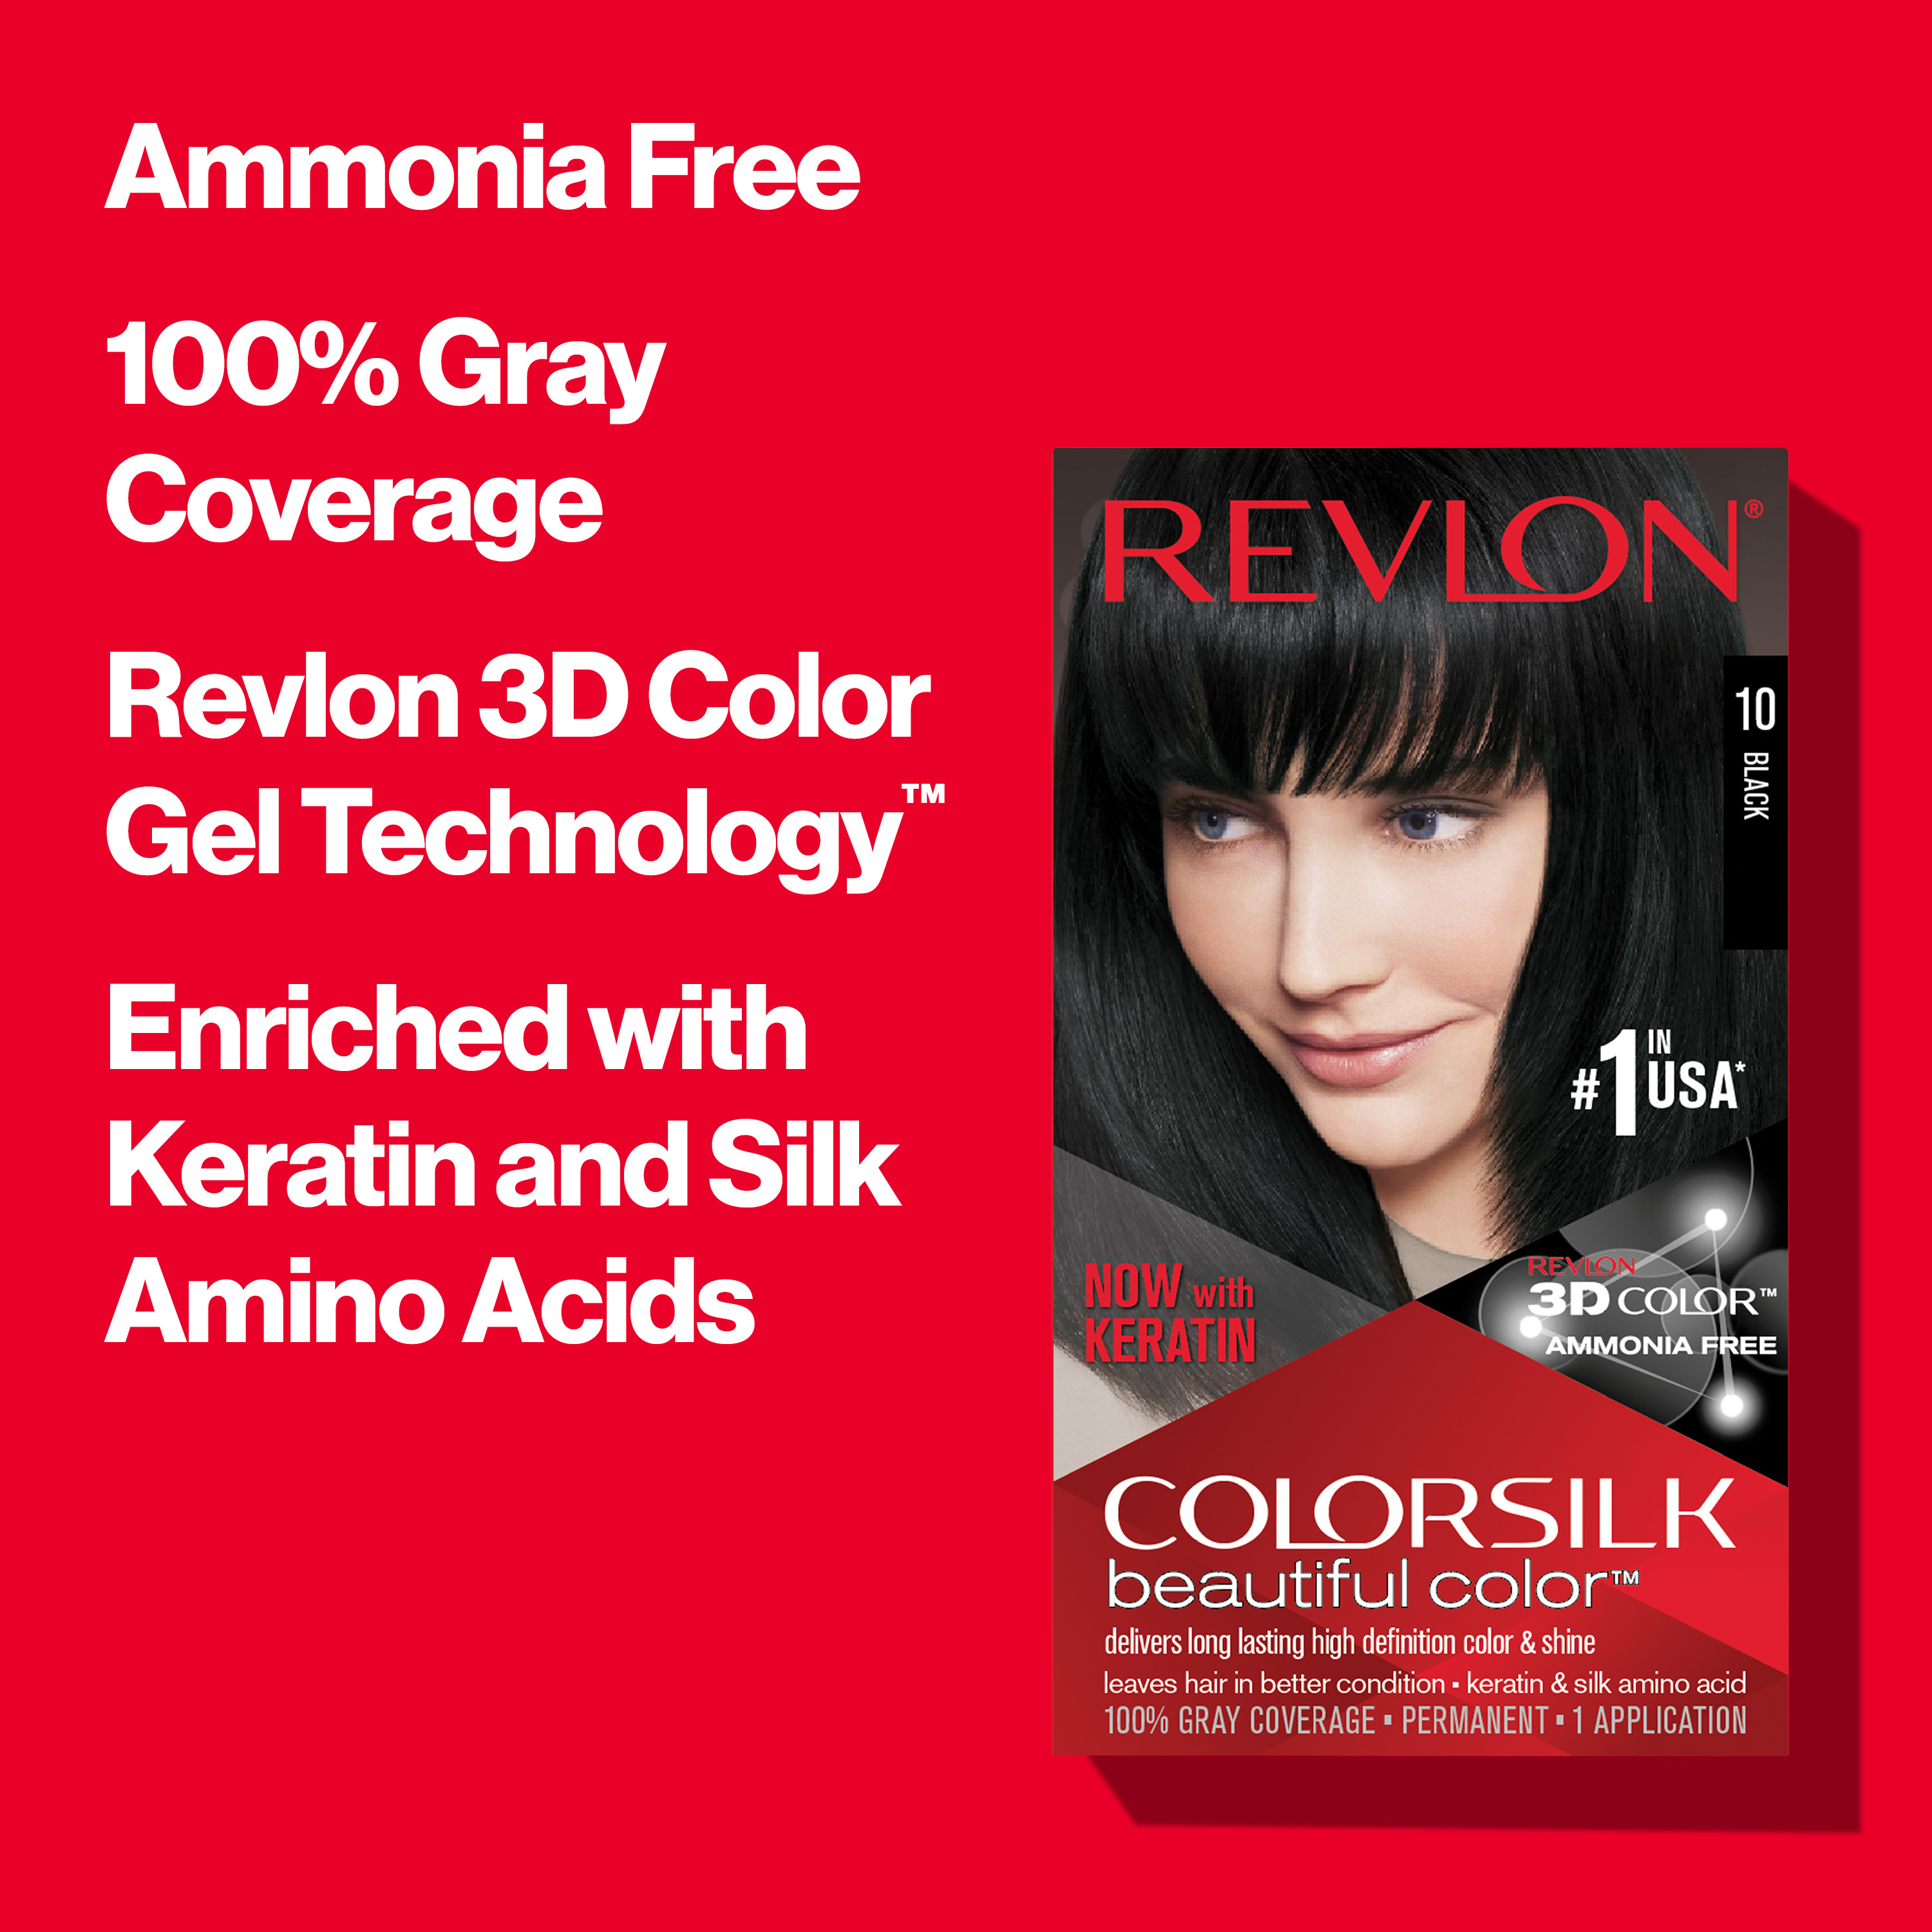 Revlon colorsilk beautiful color 47 medium rich brown permanent hair color, 1 application - image 4 of 14